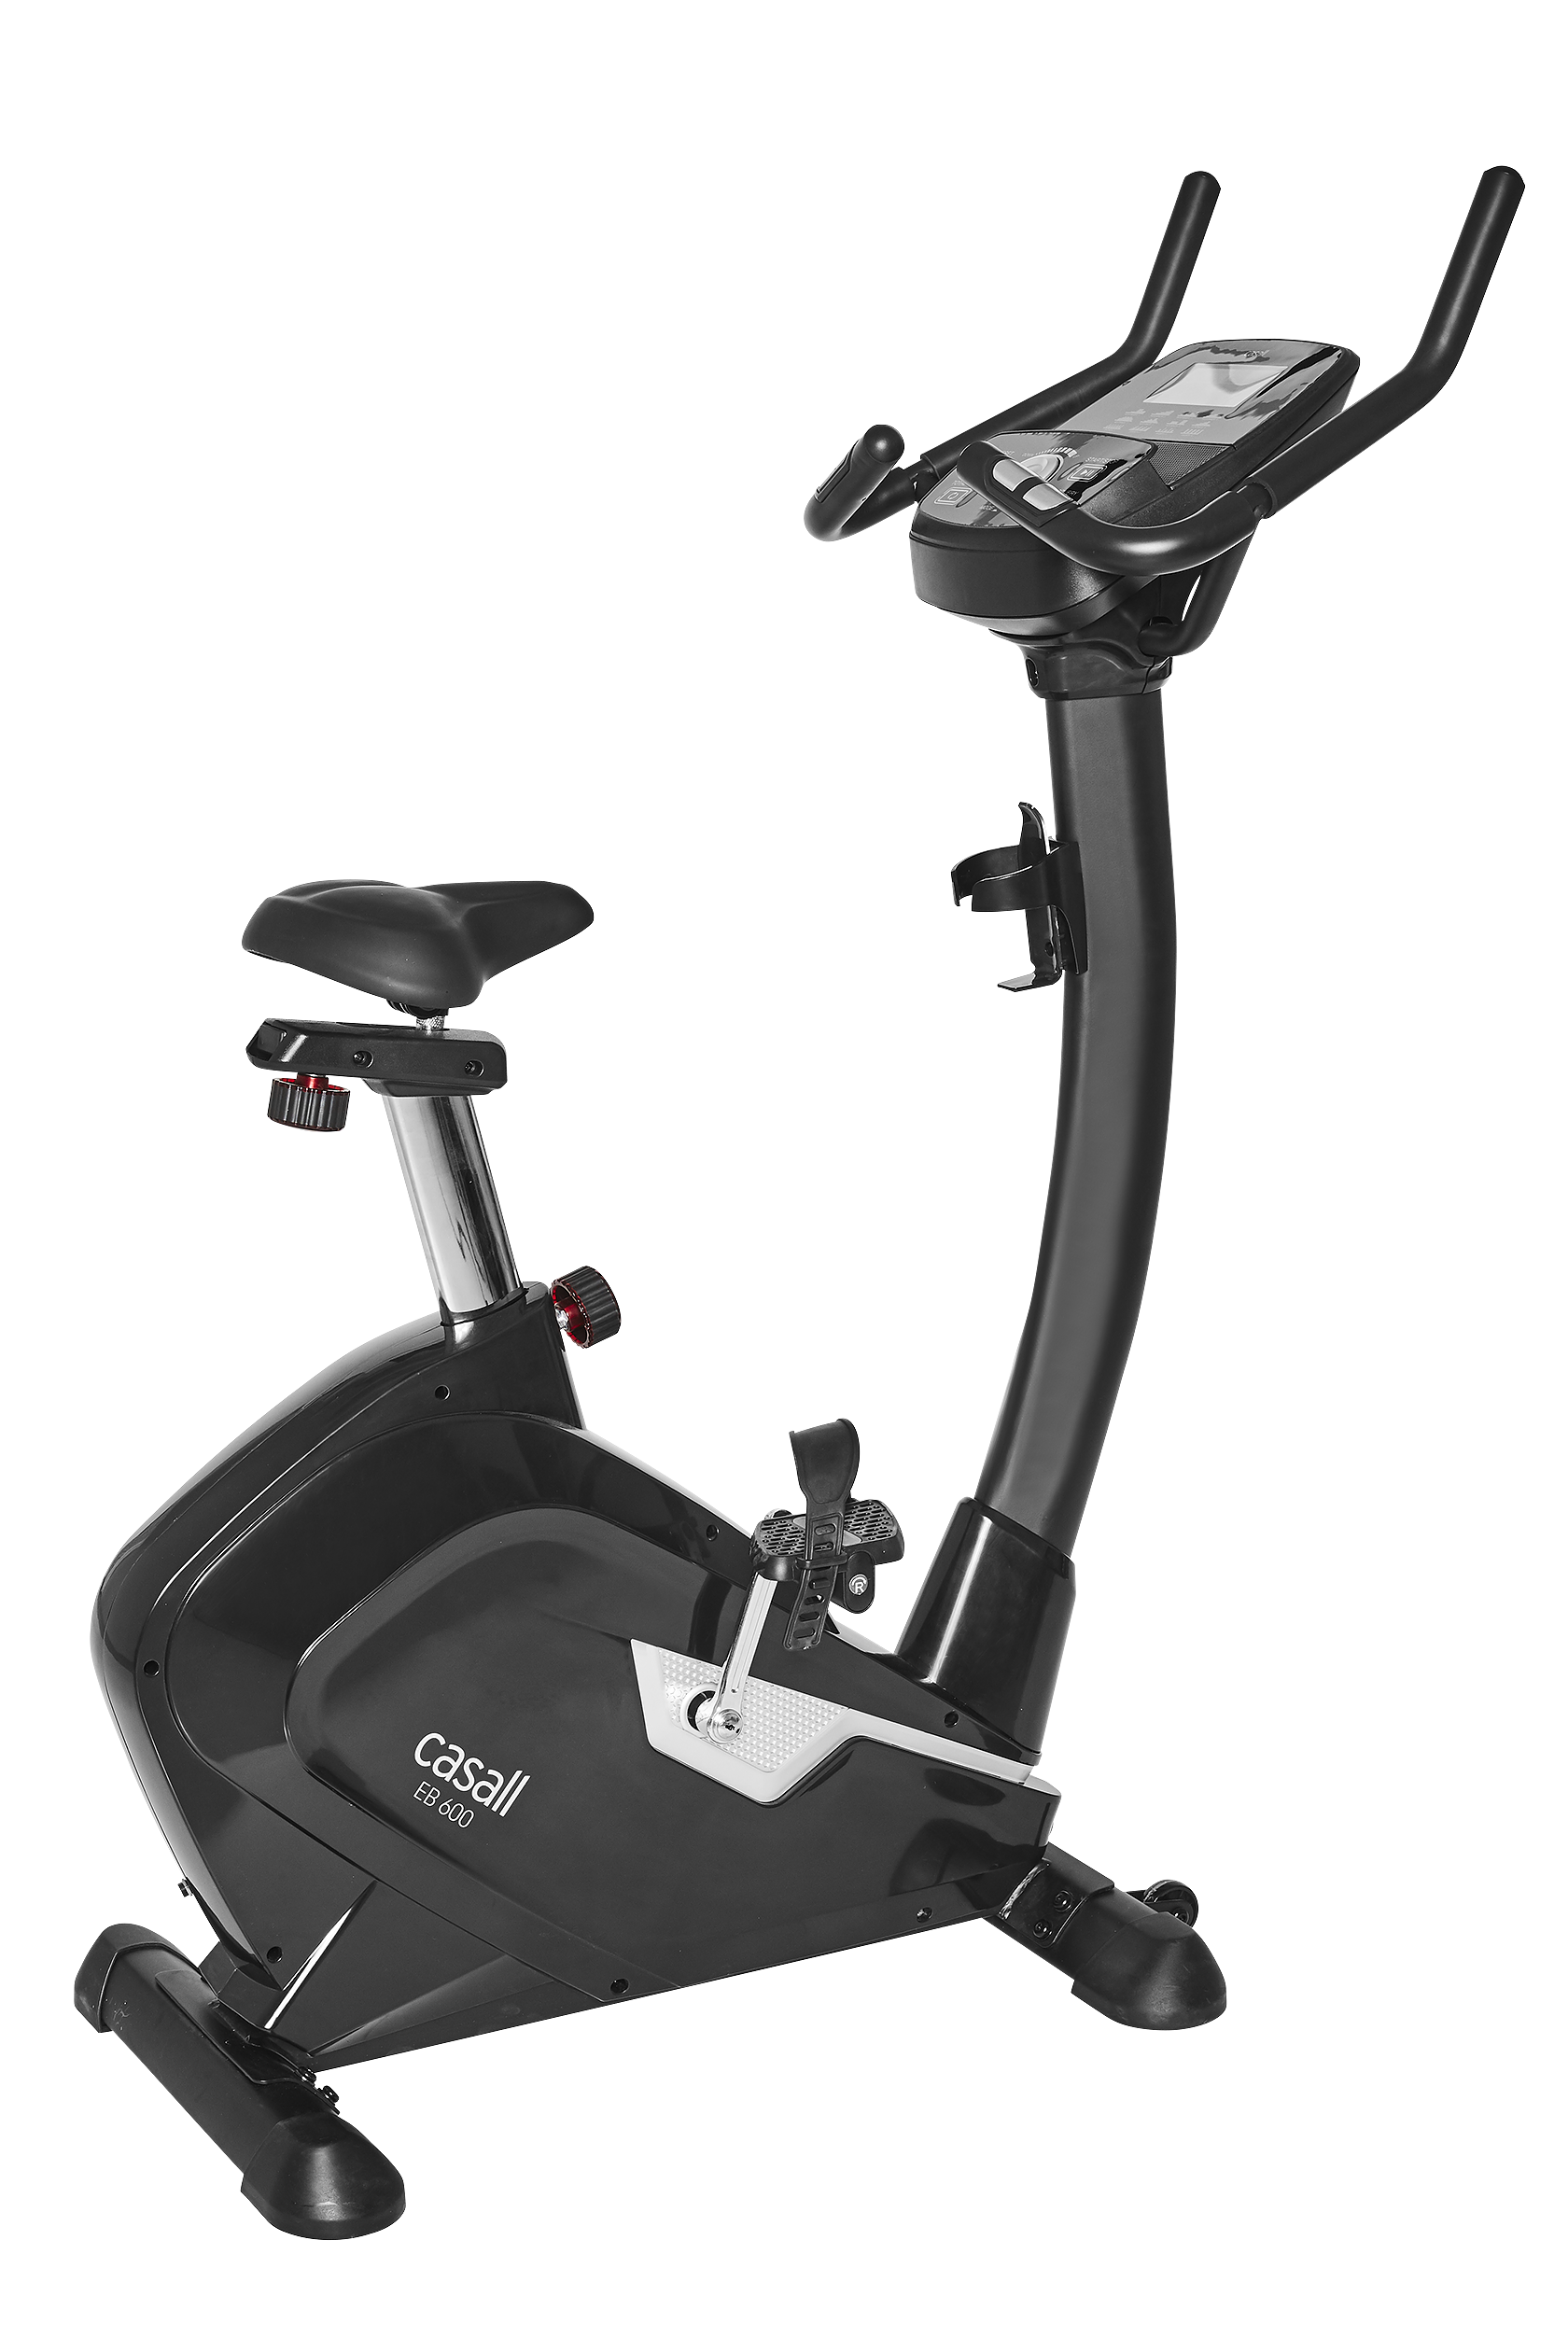 Exercise bike EB600 - Black/Chrome